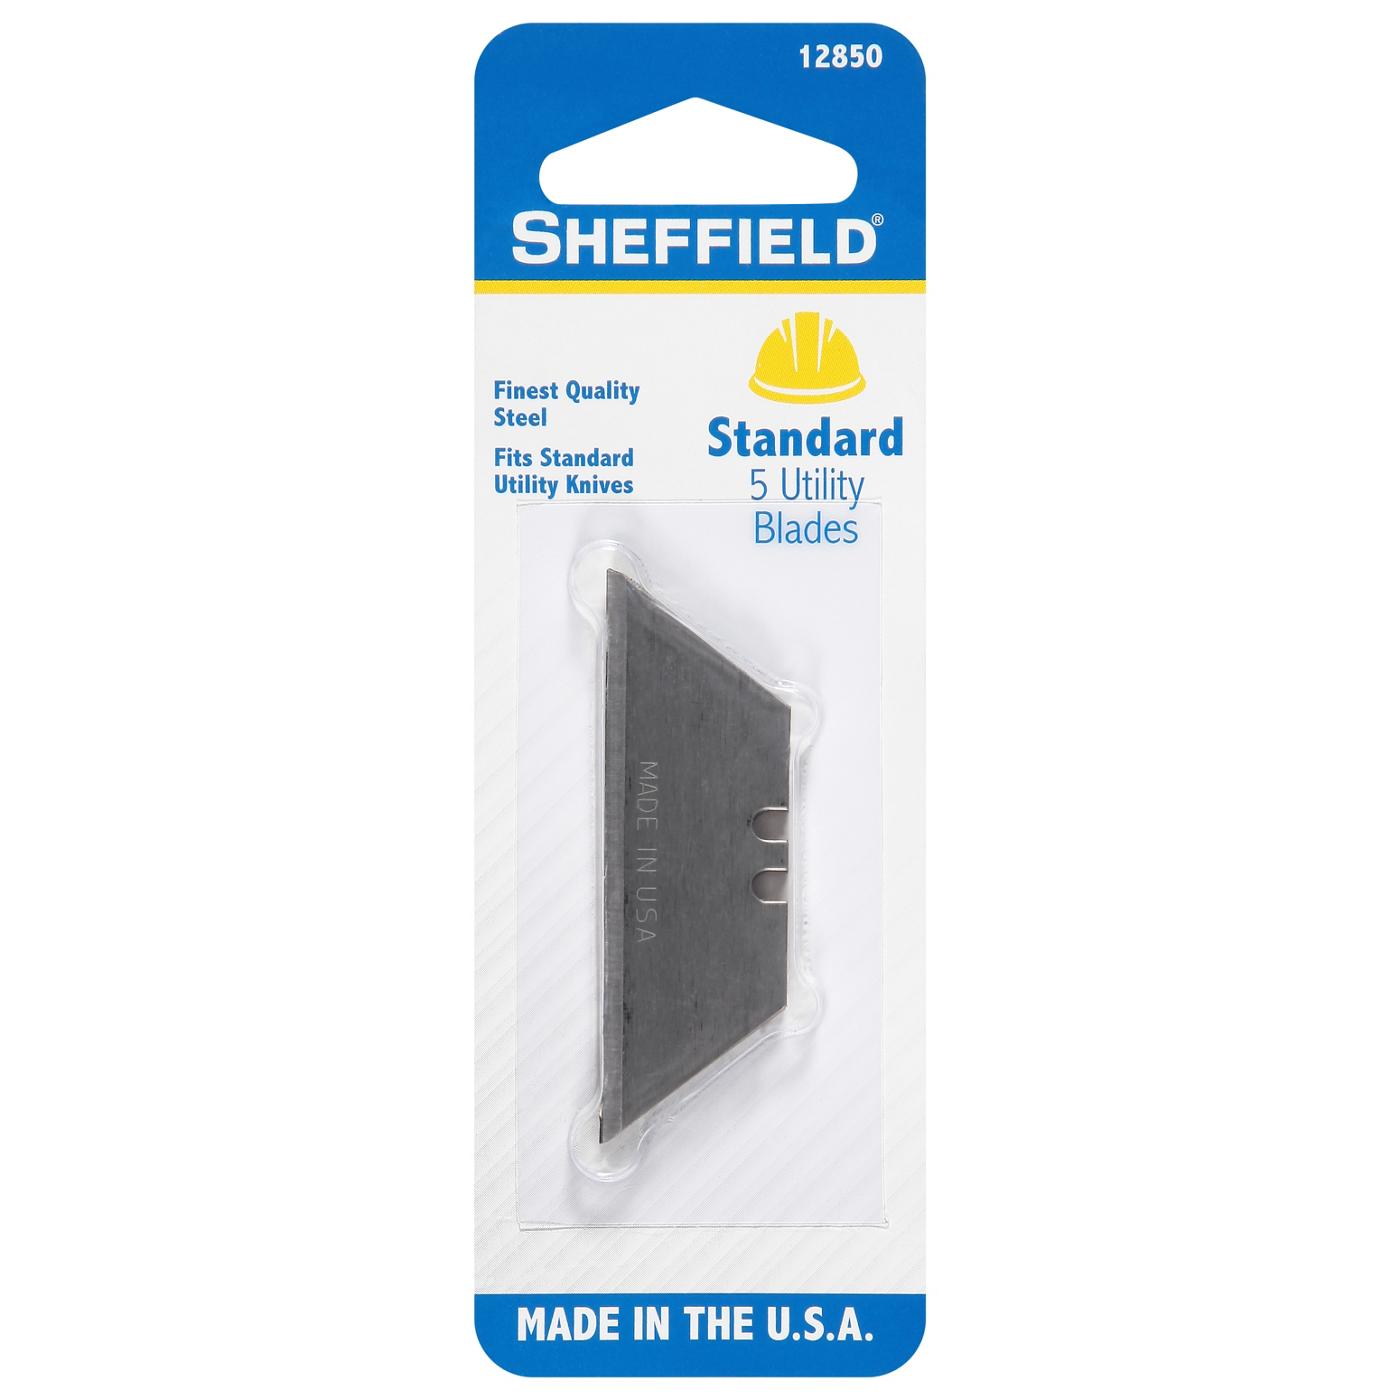 Sheffield Standard Utility Blades - Shop Hand Tools at H-E-B